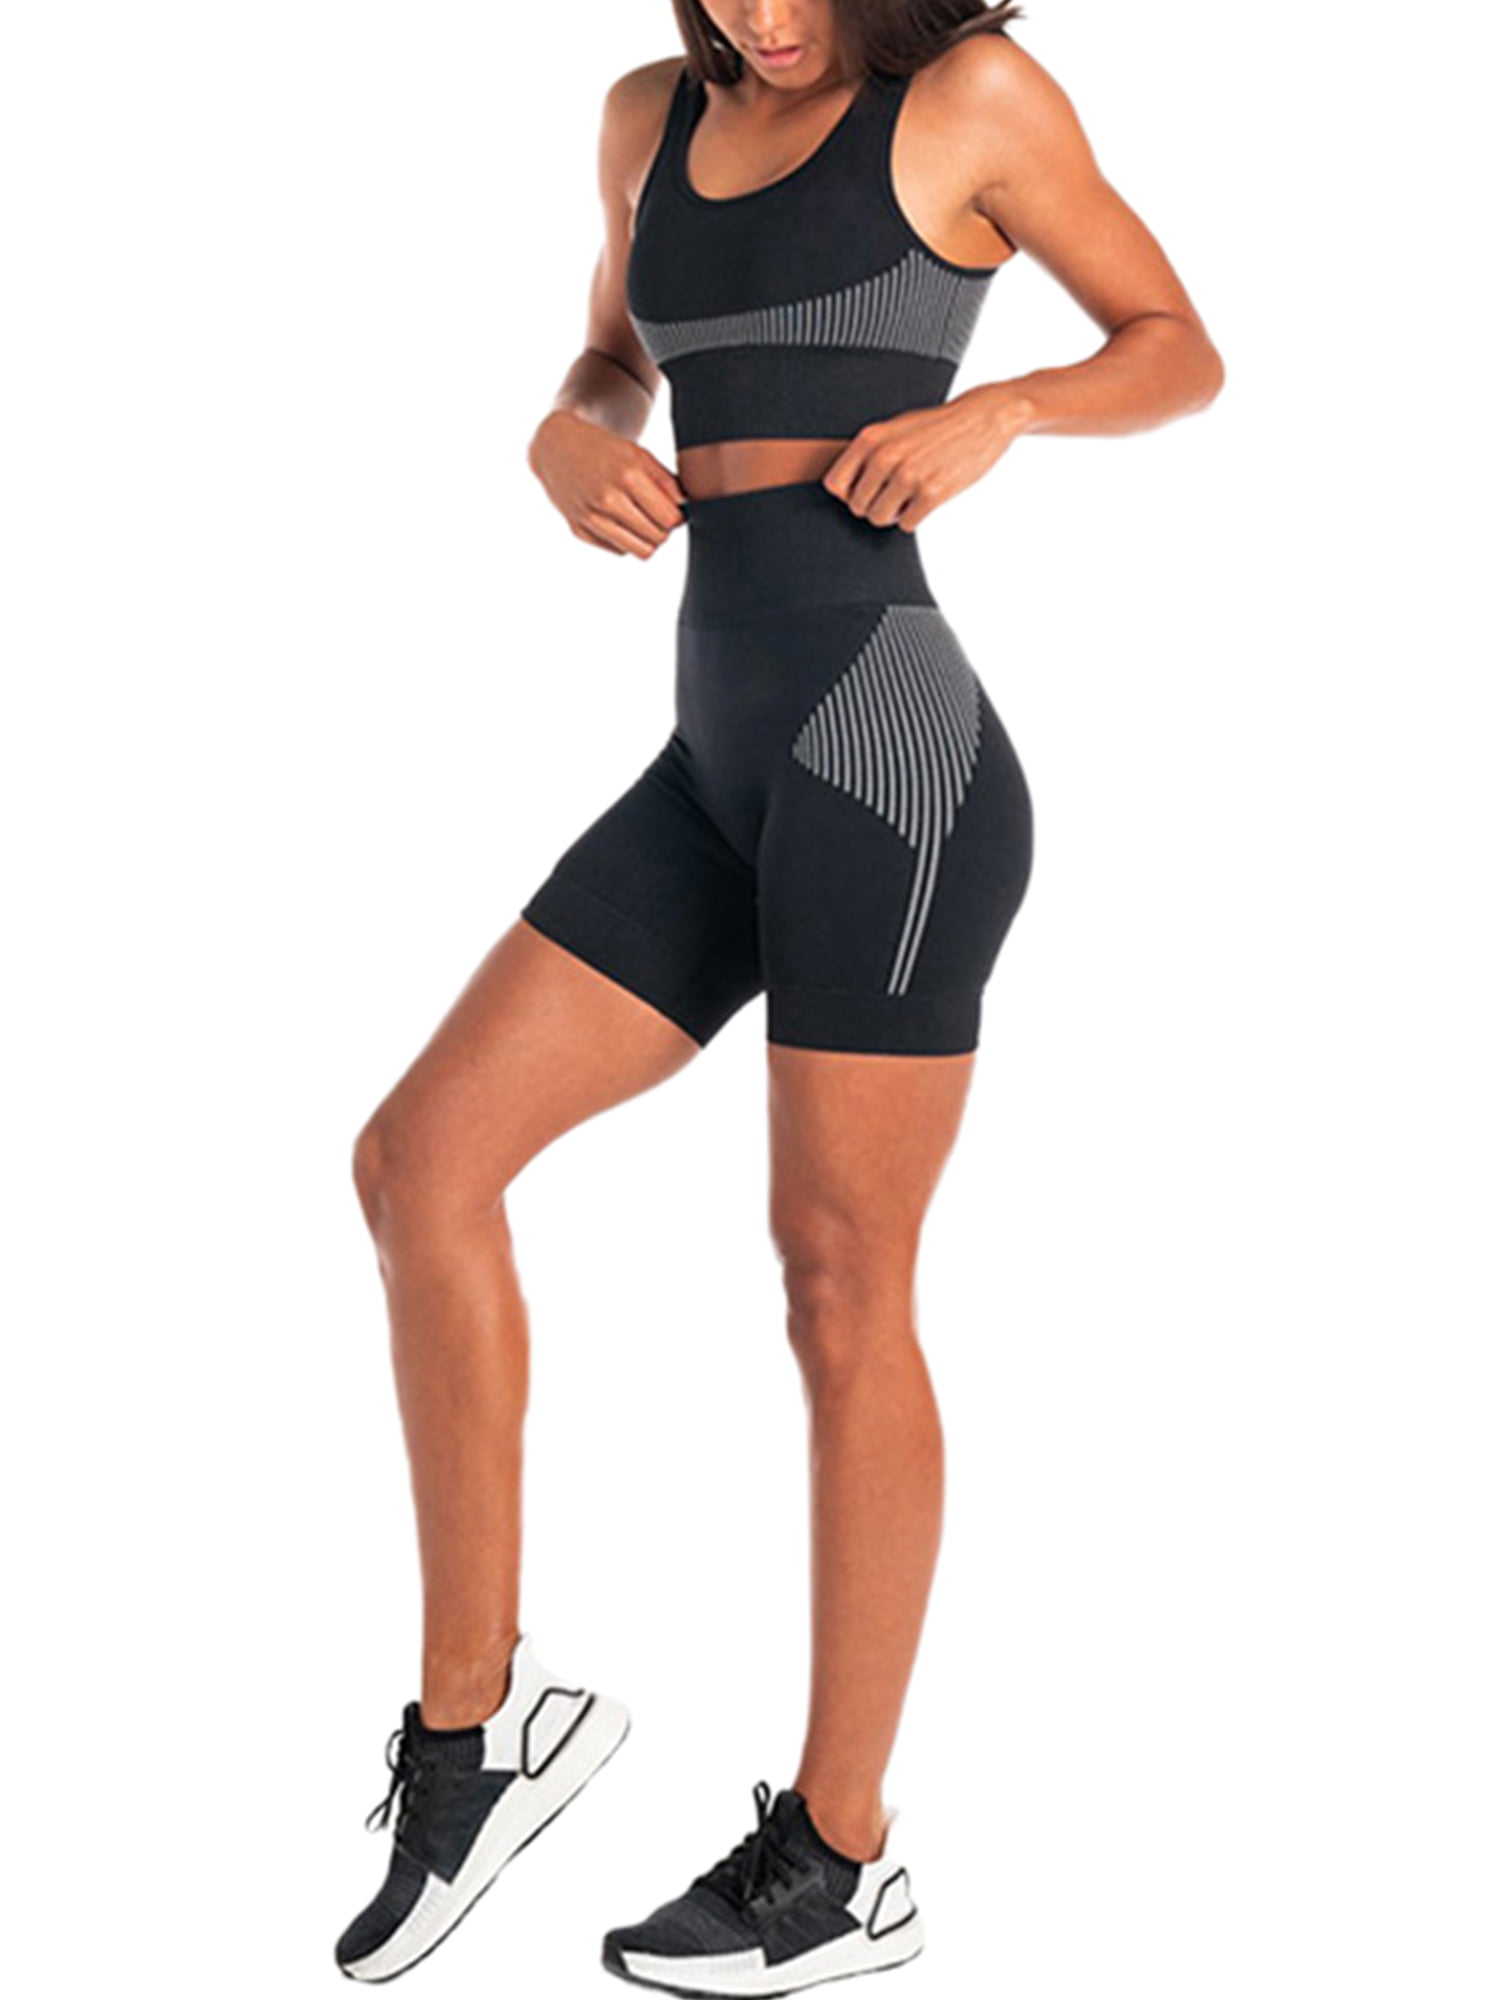 ZDXX-WCL Women Casual Sport Yoga Gym Workout Bike Shorts 